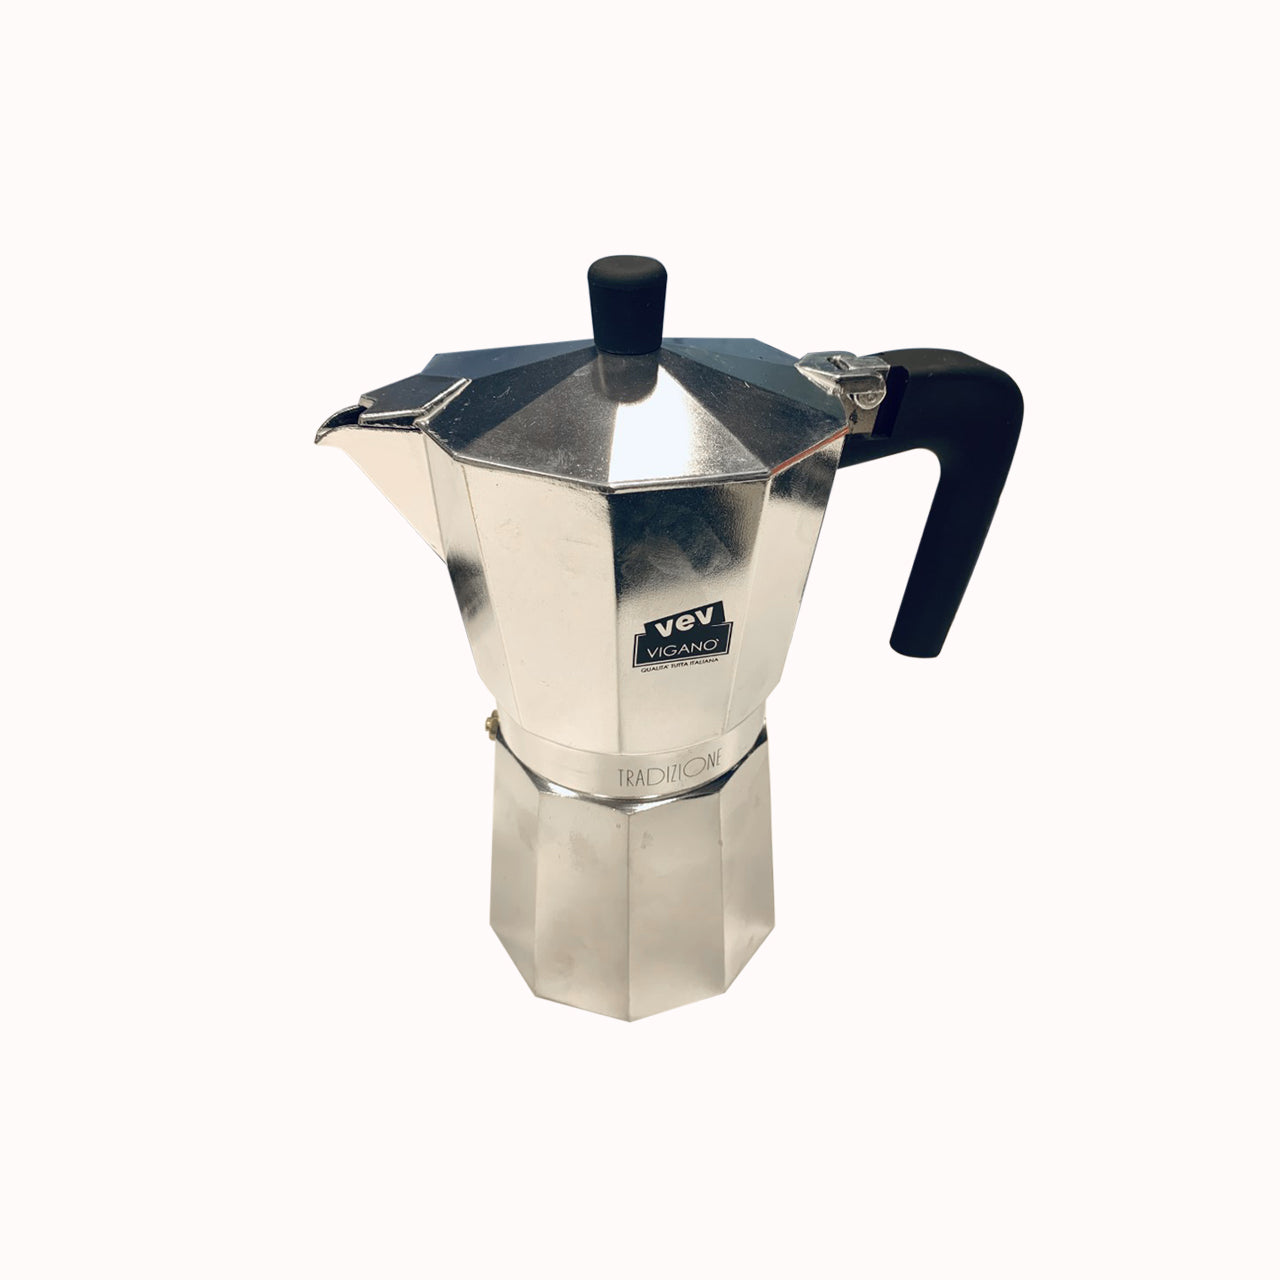 Vev Vigano Traditionale Stovetop Espresso Maker (12-Cup) - Royal Gift